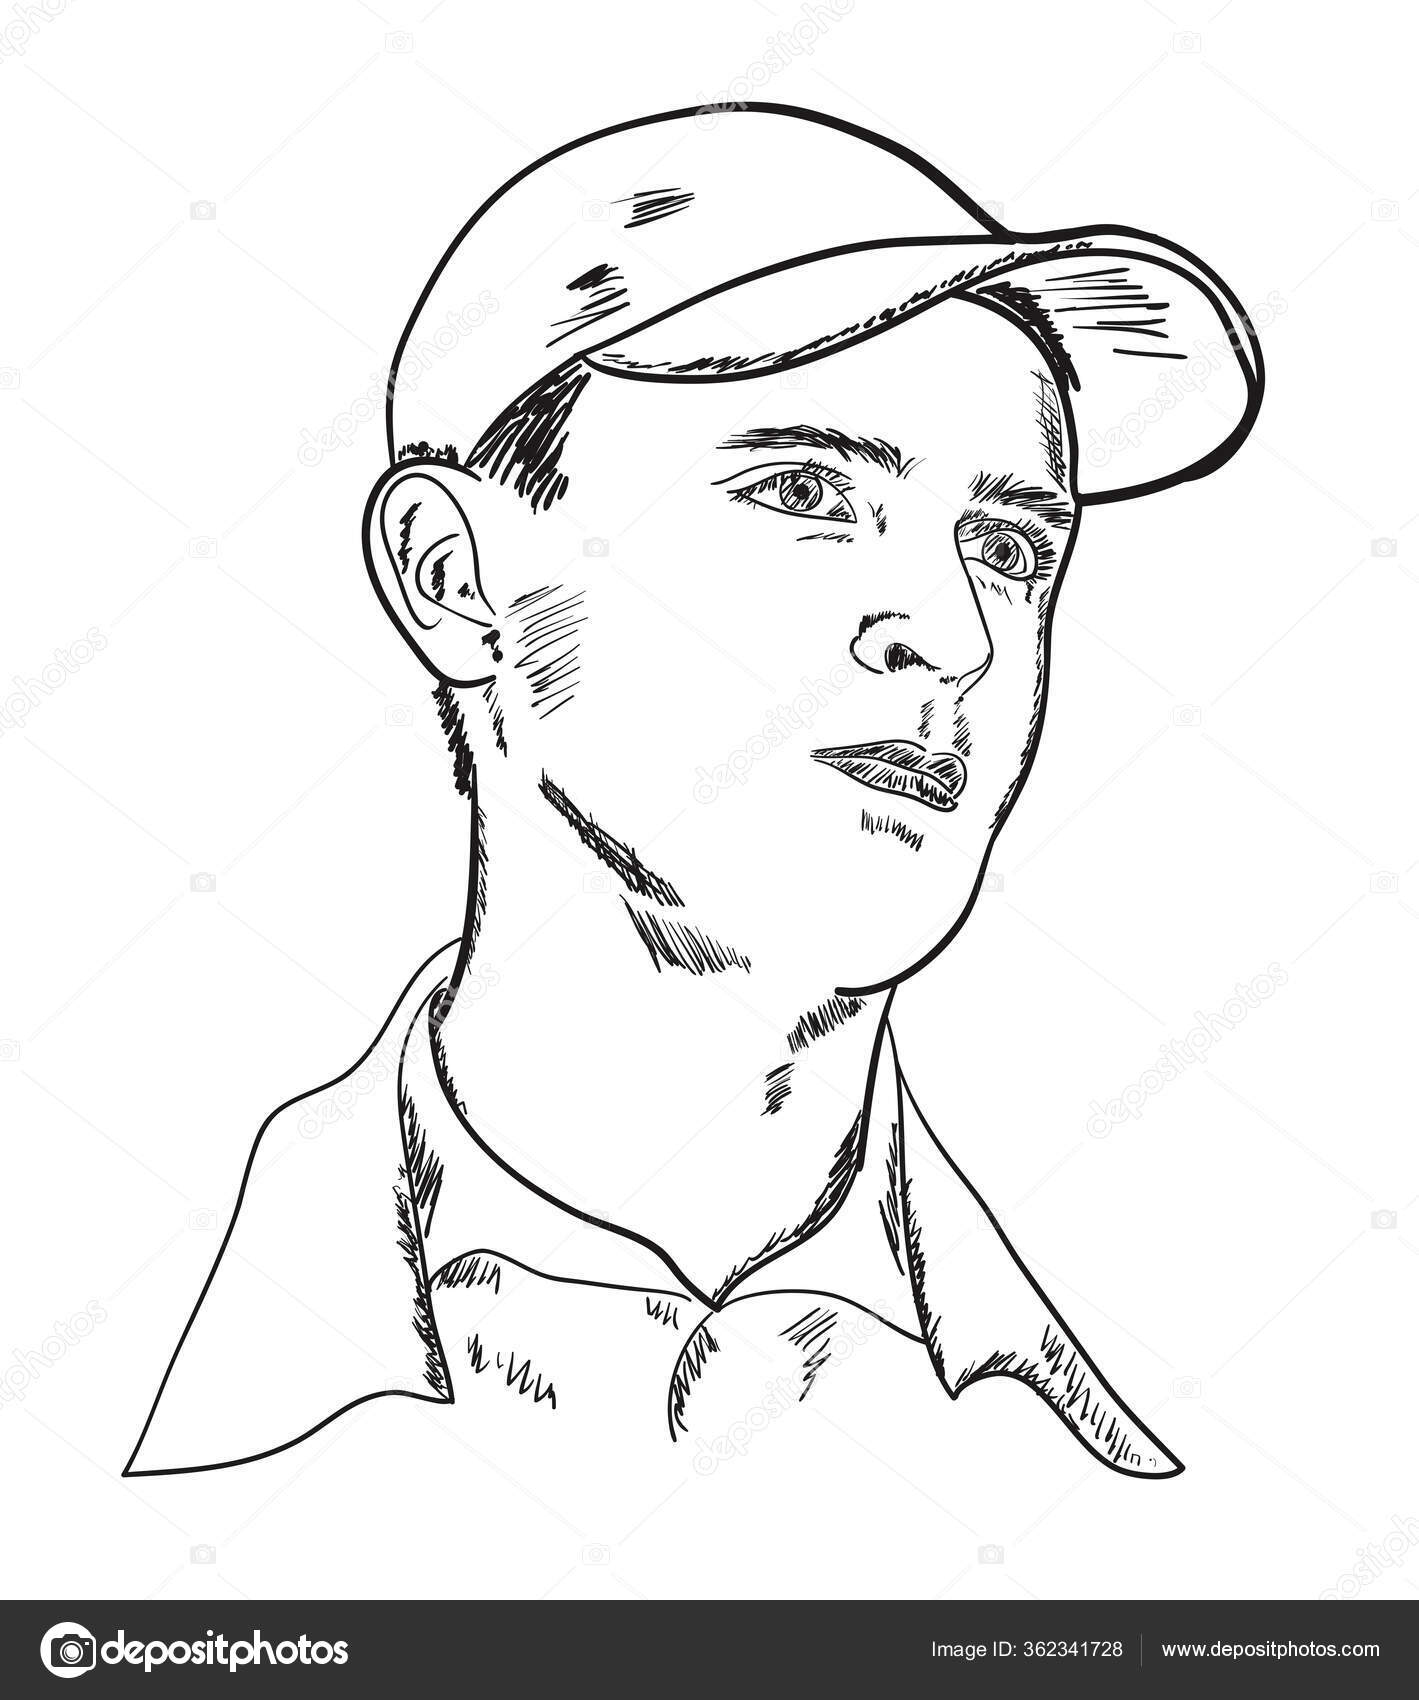 Cartoon smiling baseball cap. Black and white illustration of a smiling  baseball cap. | CanStock